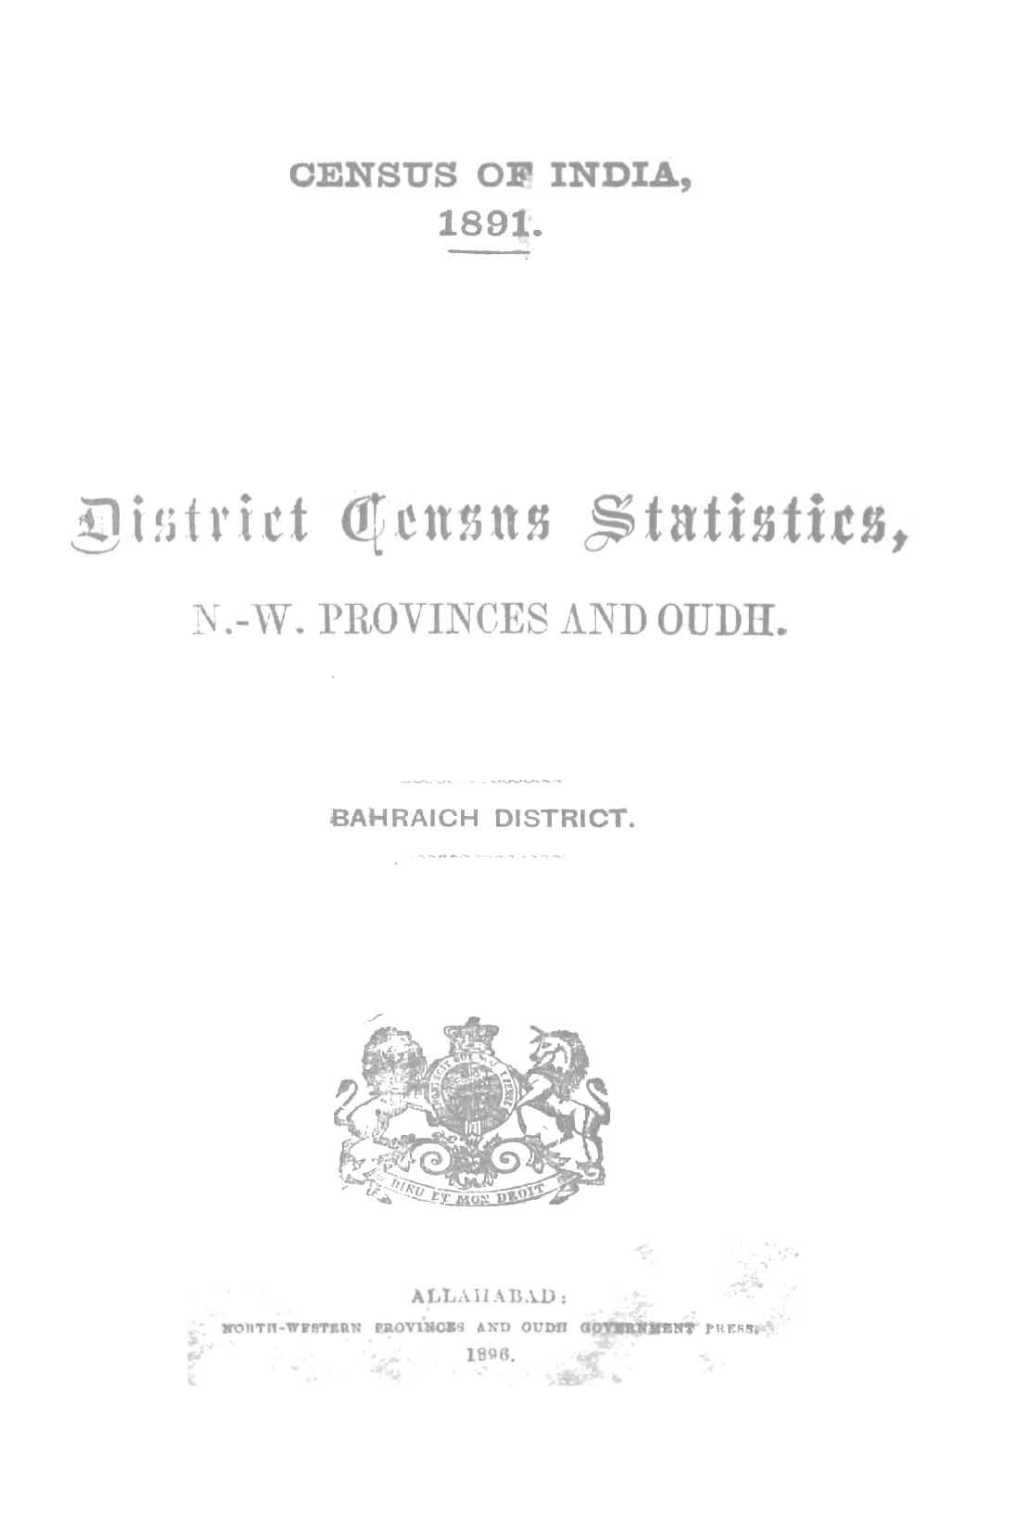 District Census Statistics, N. W.Provinces and Oudh, Bahraich